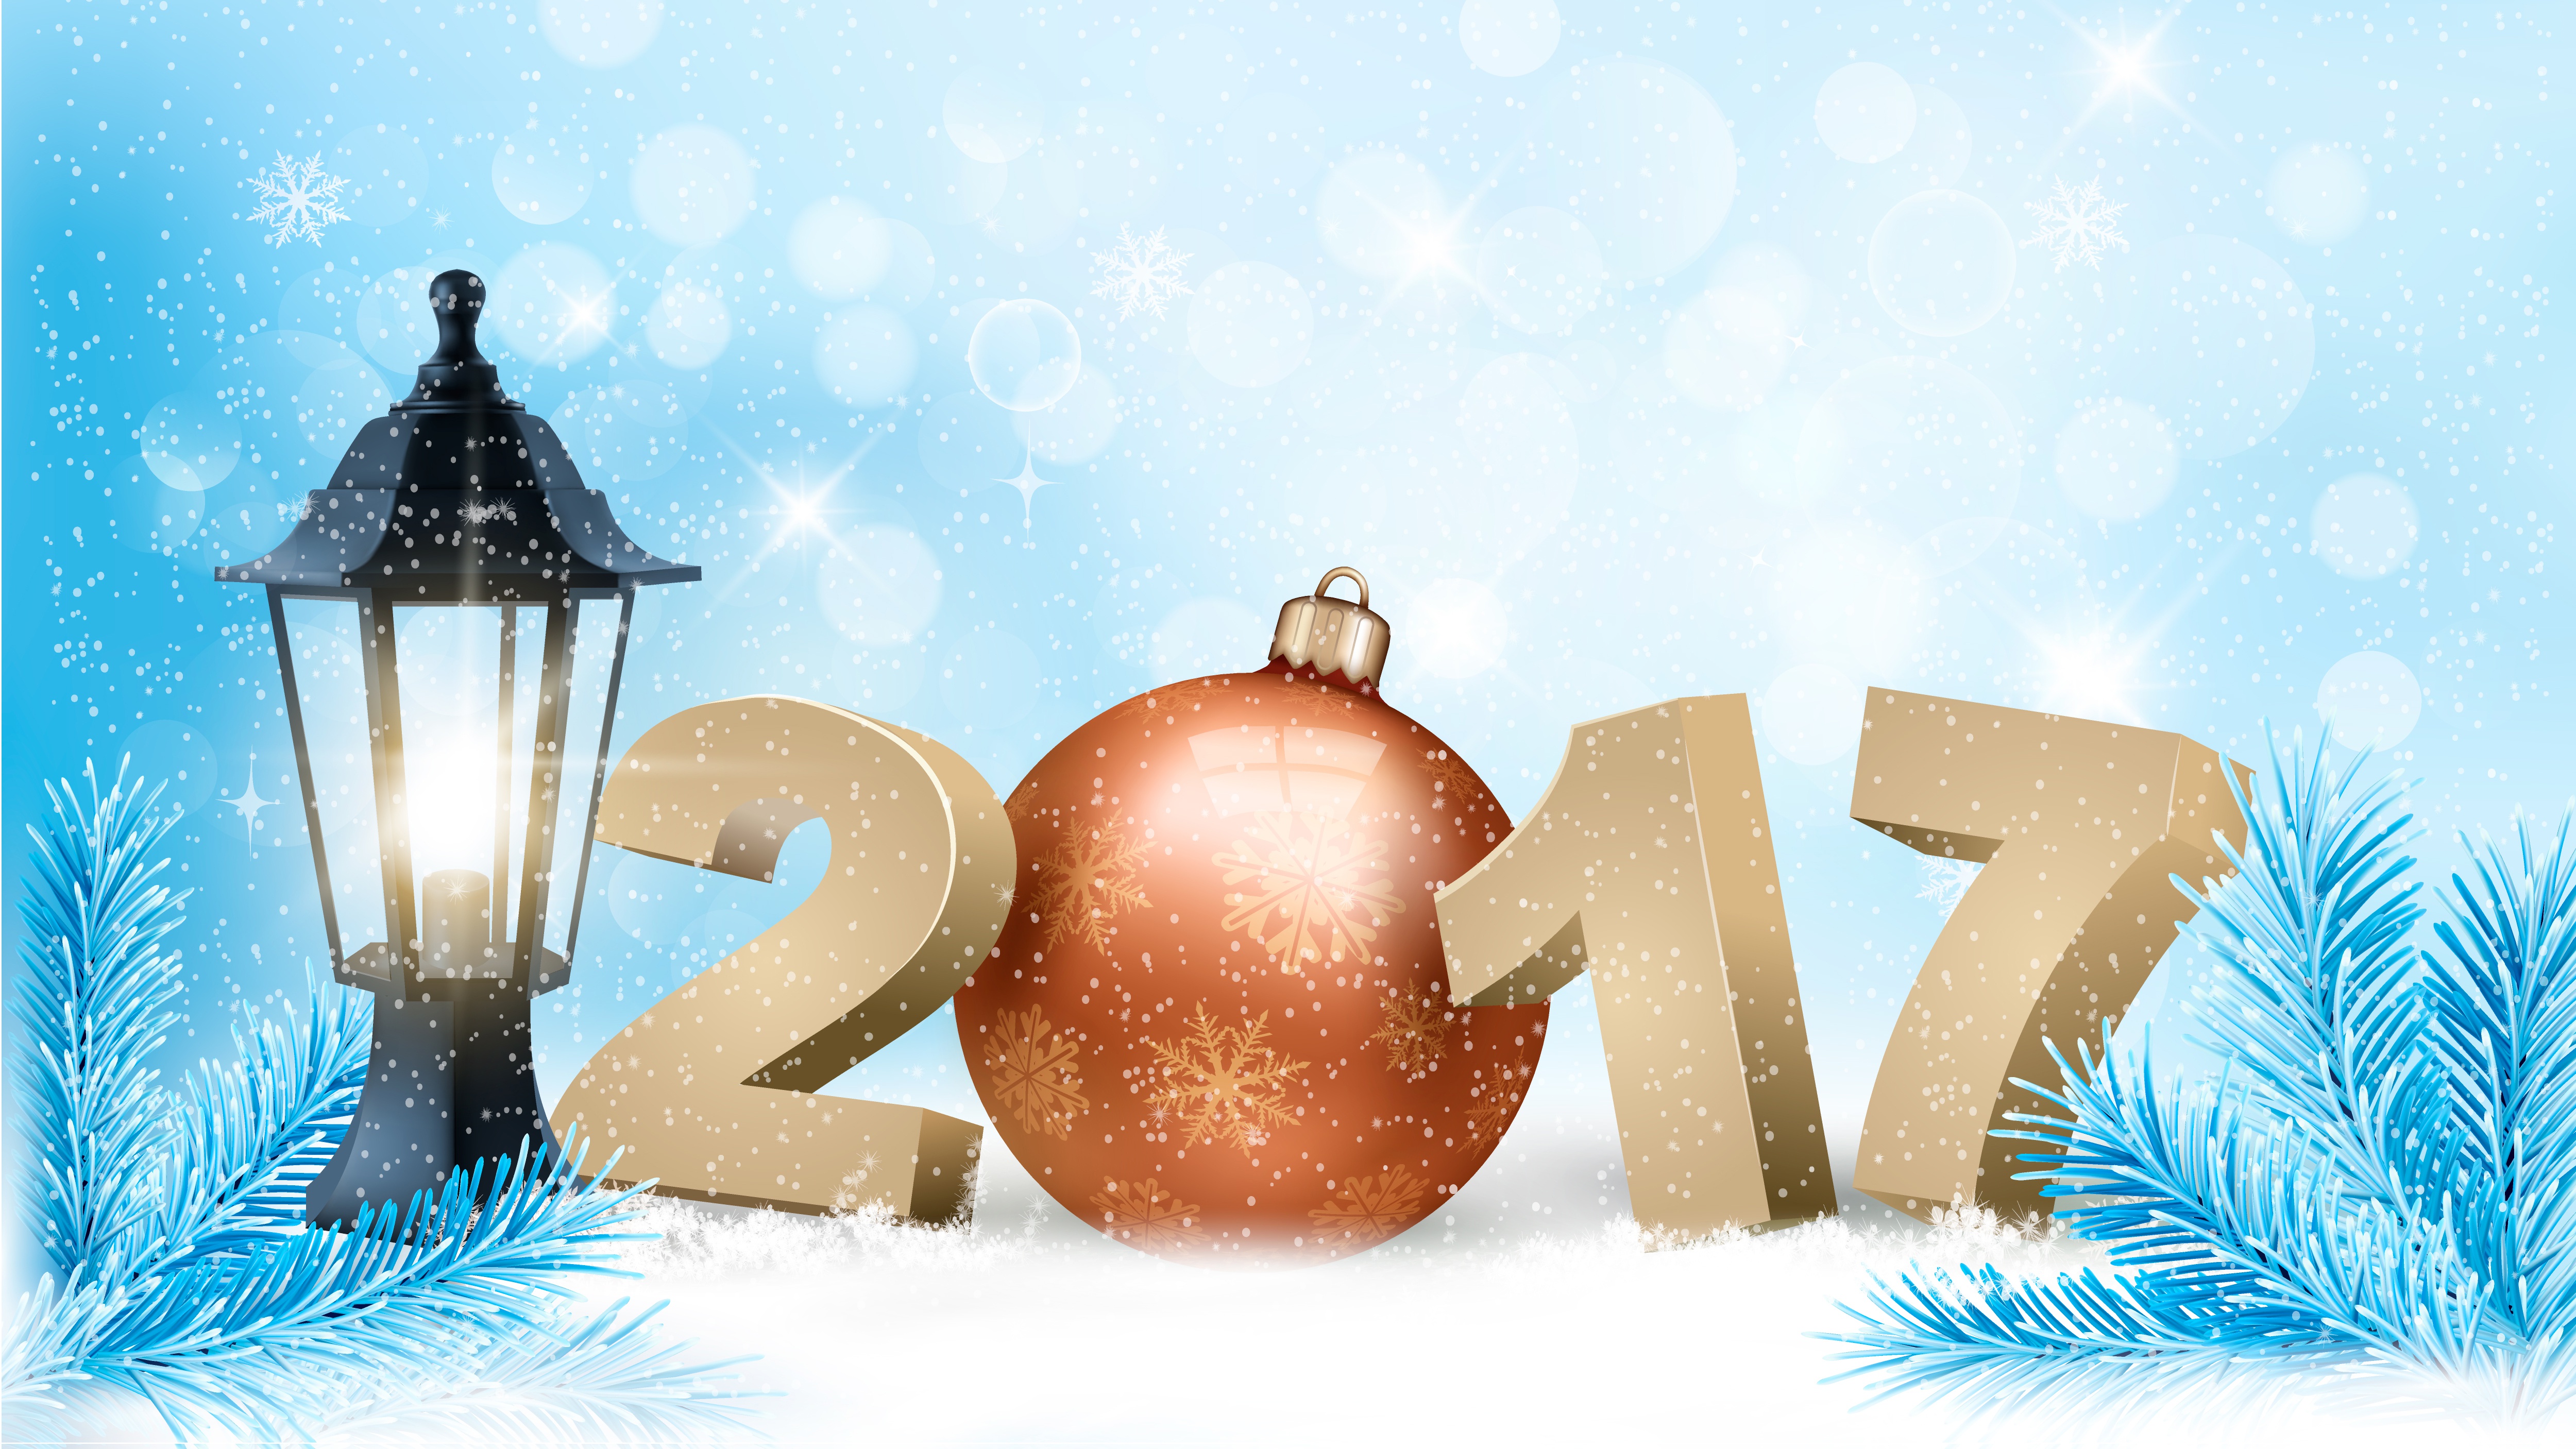 PCデスクトップに冬, 新年, 降雪, ホリデー, 灯籠, 2017年新年画像を無料でダウンロード